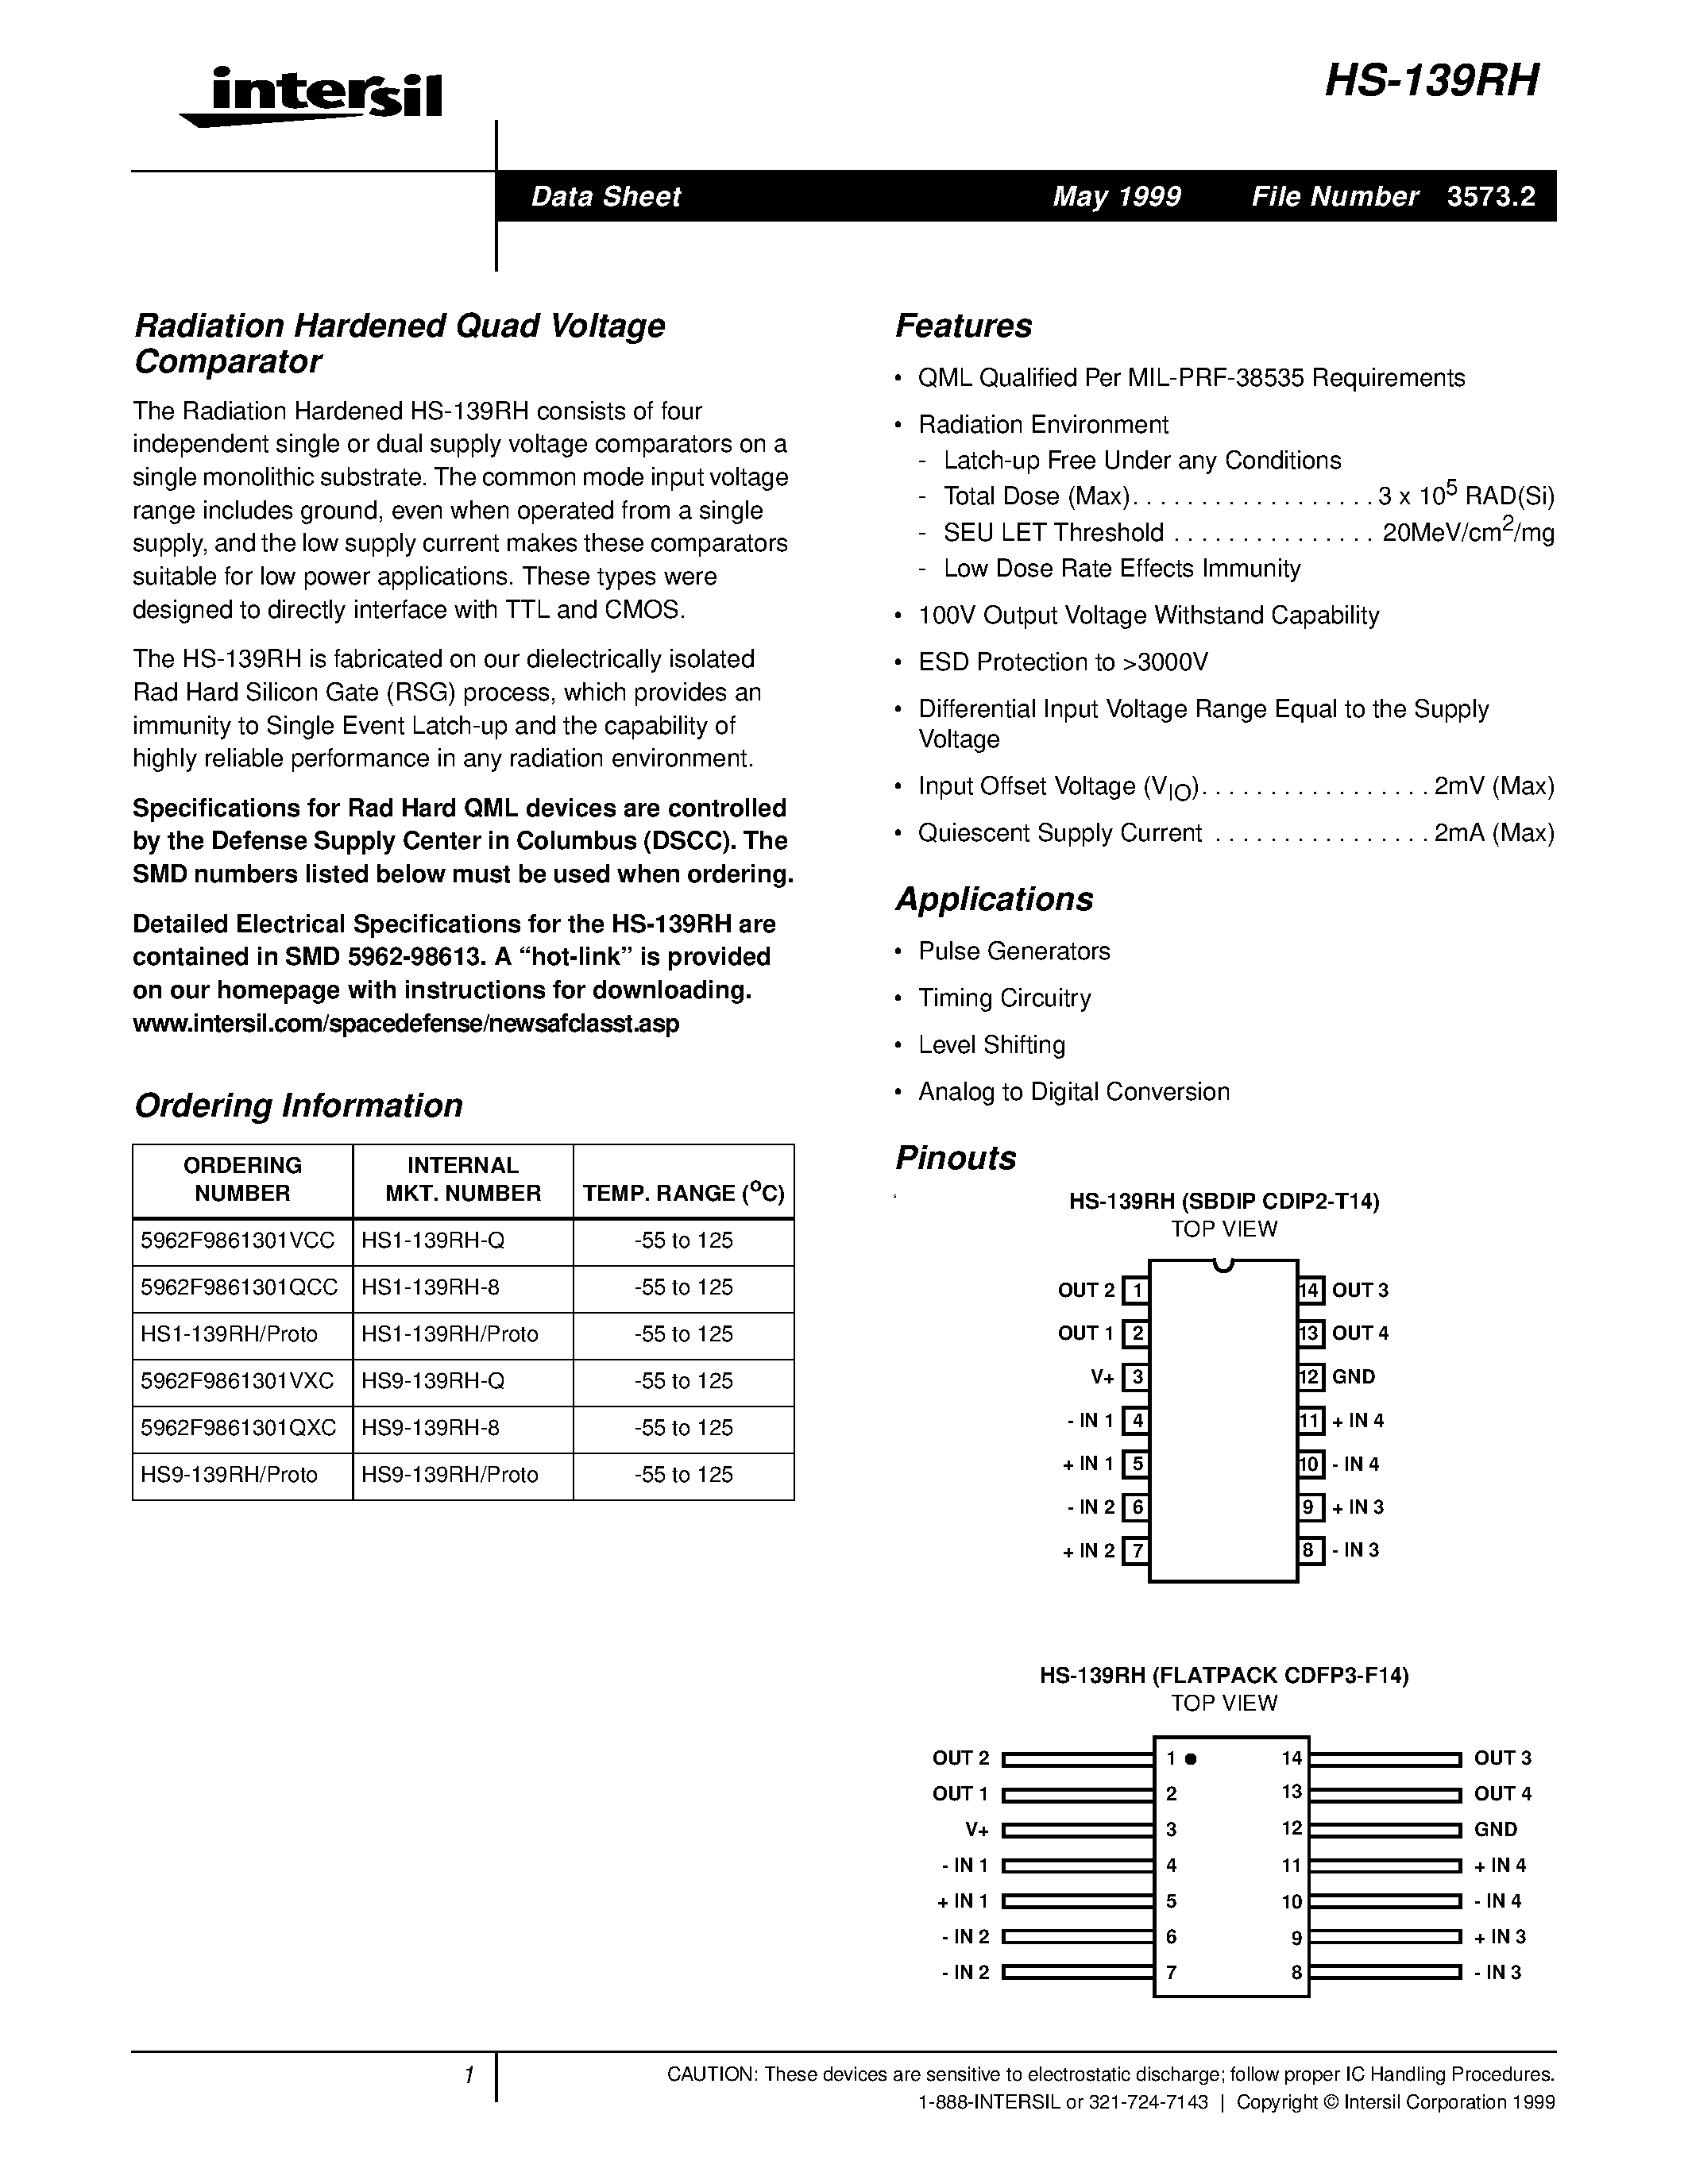 Даташит HS9-139RH-Q - Radiation Hardened Quad Voltage Comparator страница 1